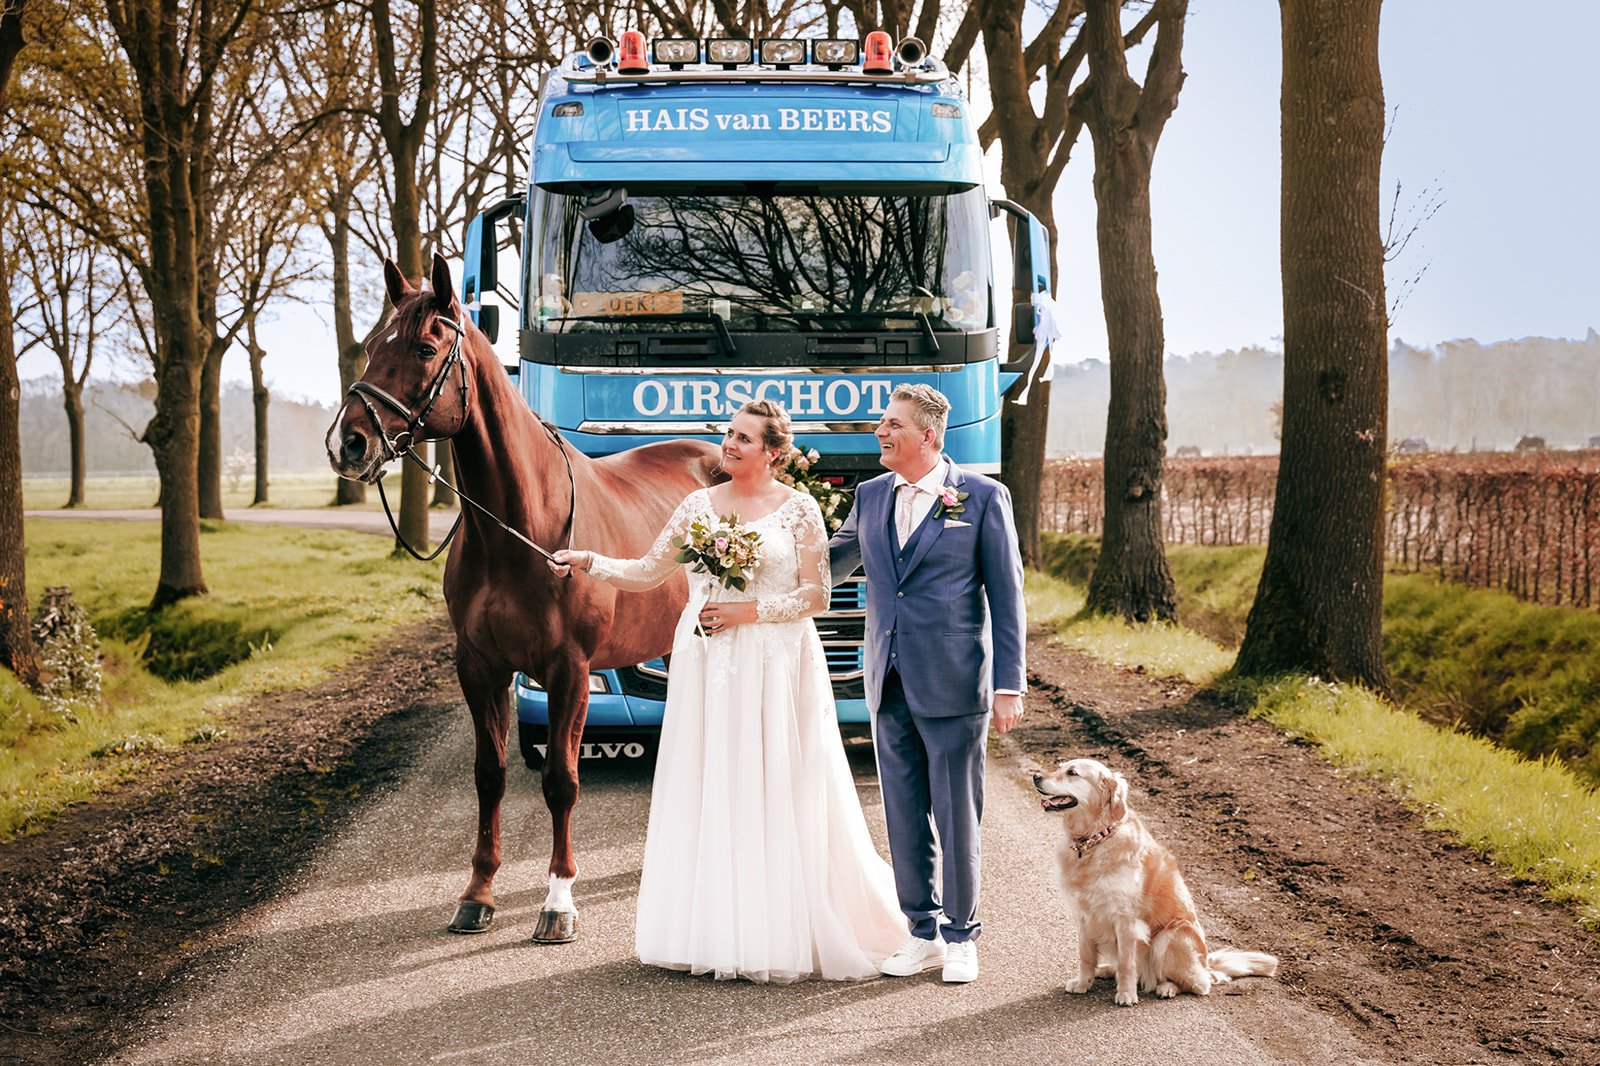 Trouwen-oirschot-spoordonk-eindhoven-golfbaan-bruiloft-trouwreportage-vrachtwagen-paard-manege